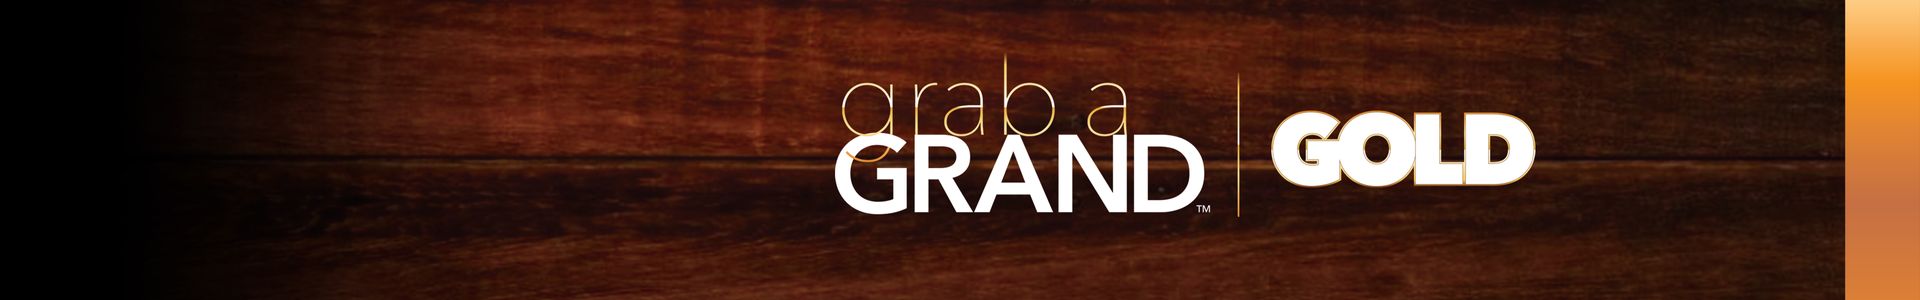 Grab-A-Grand Gold 